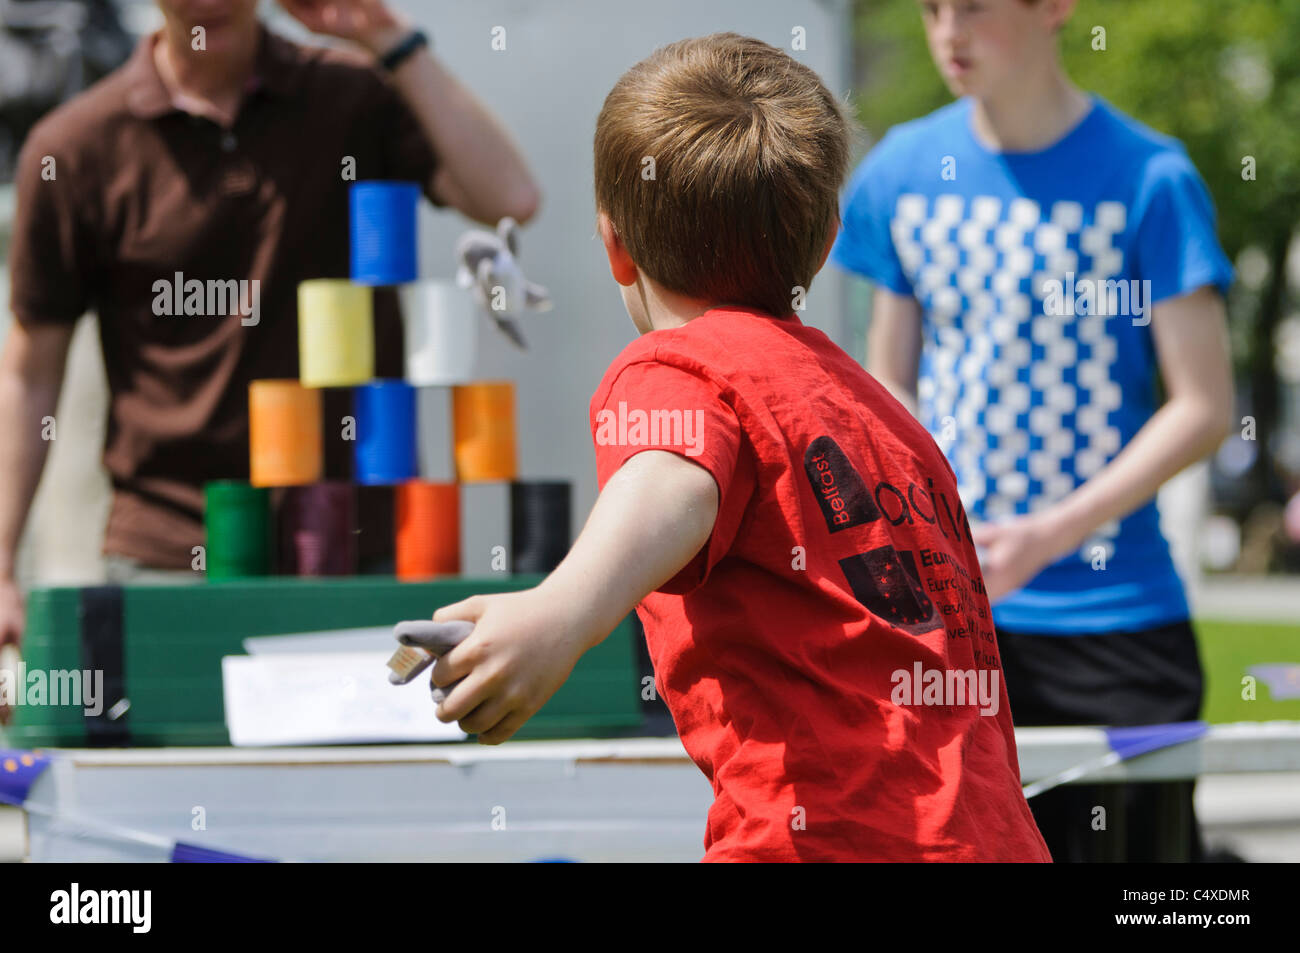 Boy throws bean bag at tins in fairground game 'Tin Can Alley' Stock Photo